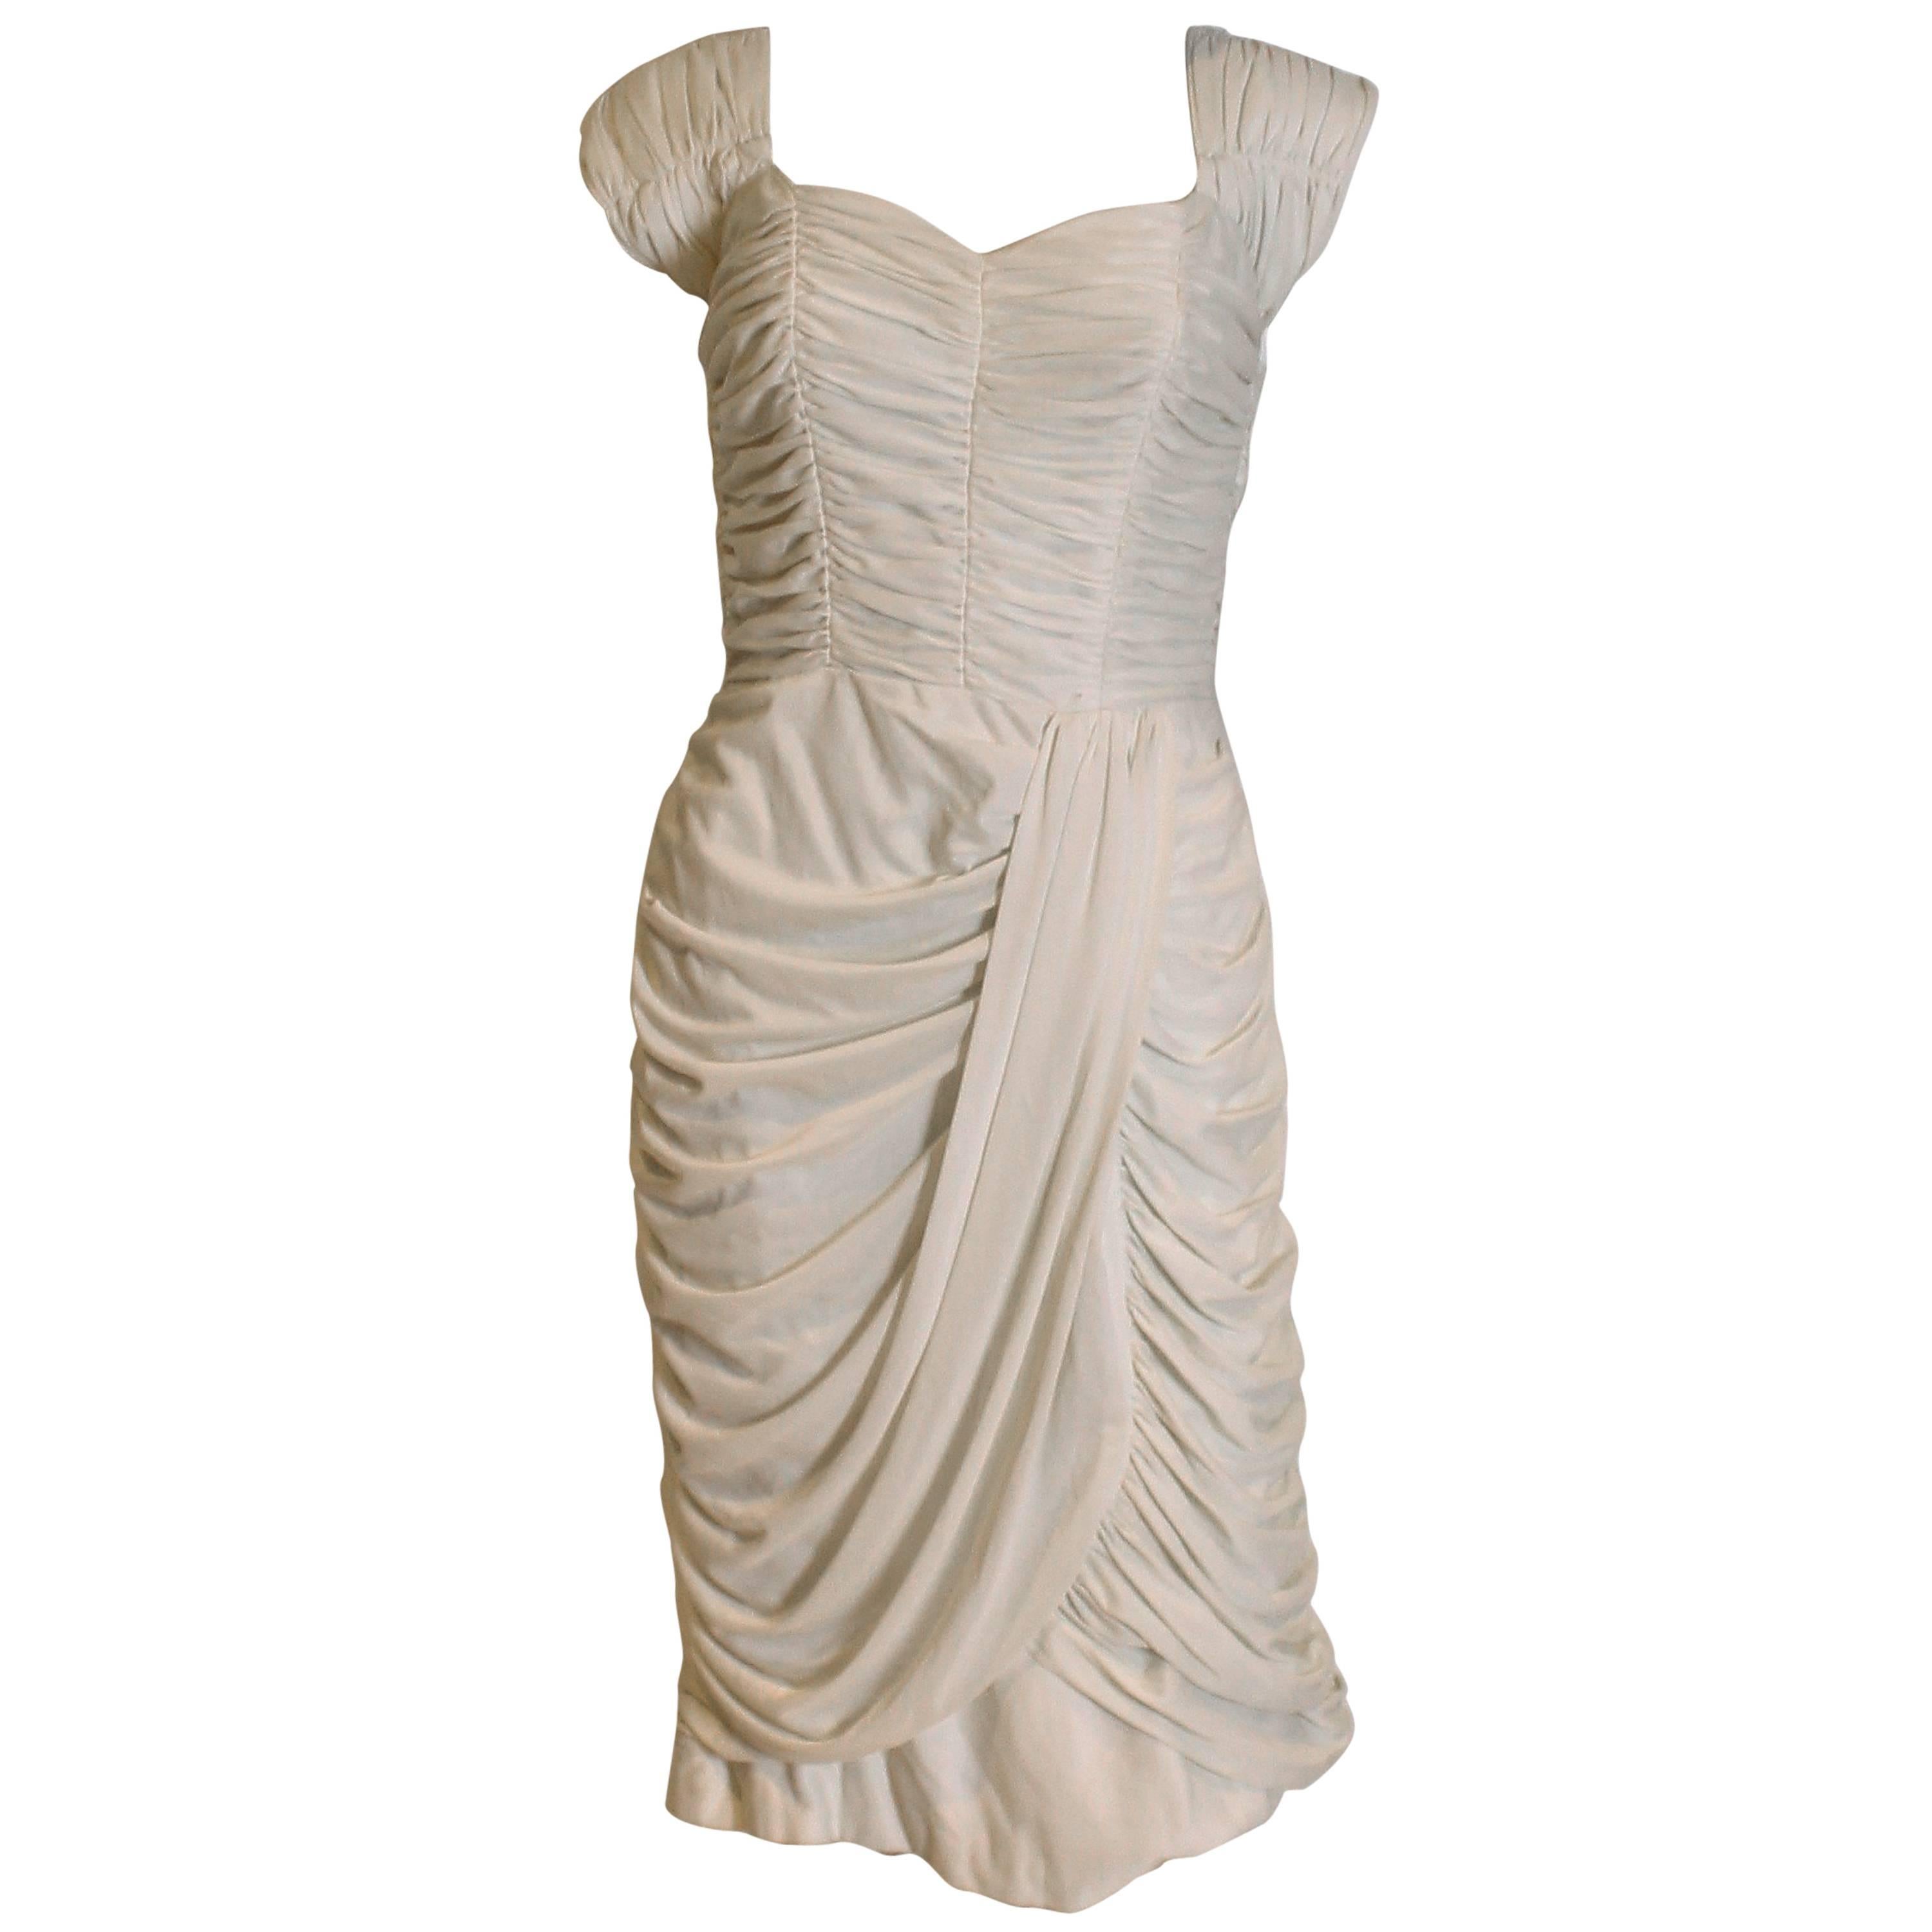 1950s Grecian Style Gathered Dress